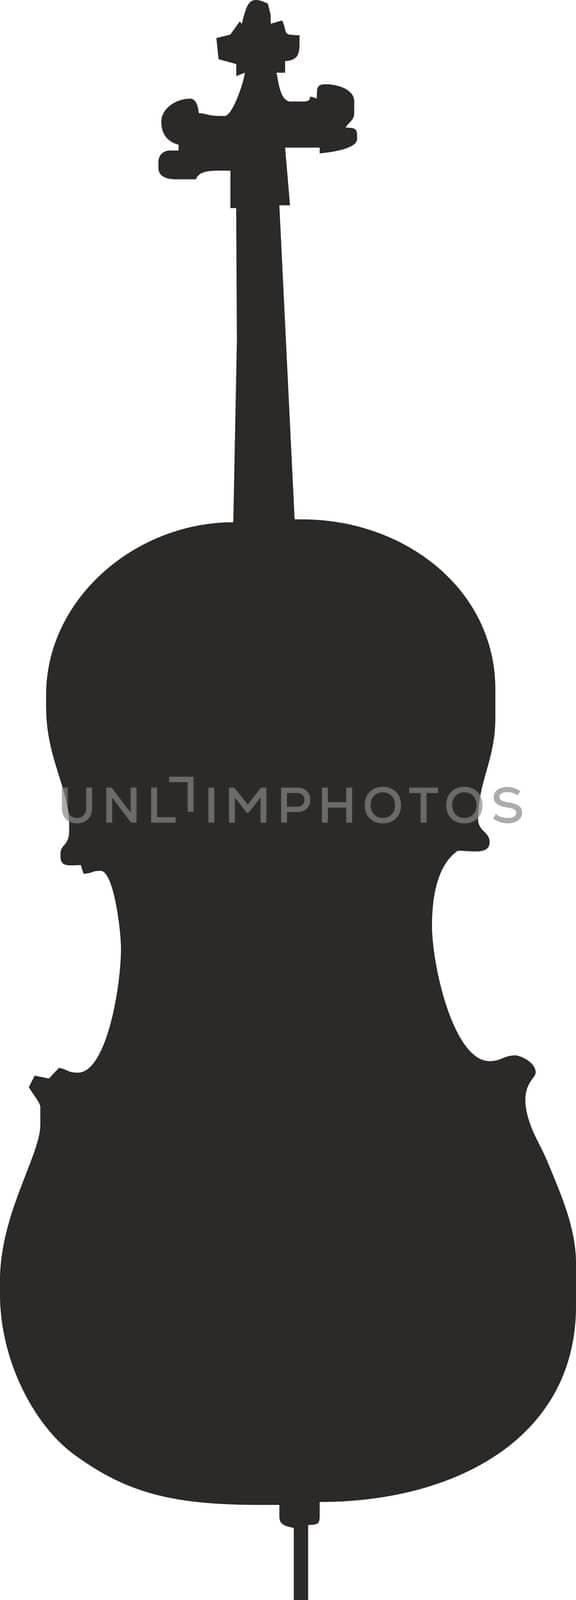 cello silhouette - isolated vector illustration